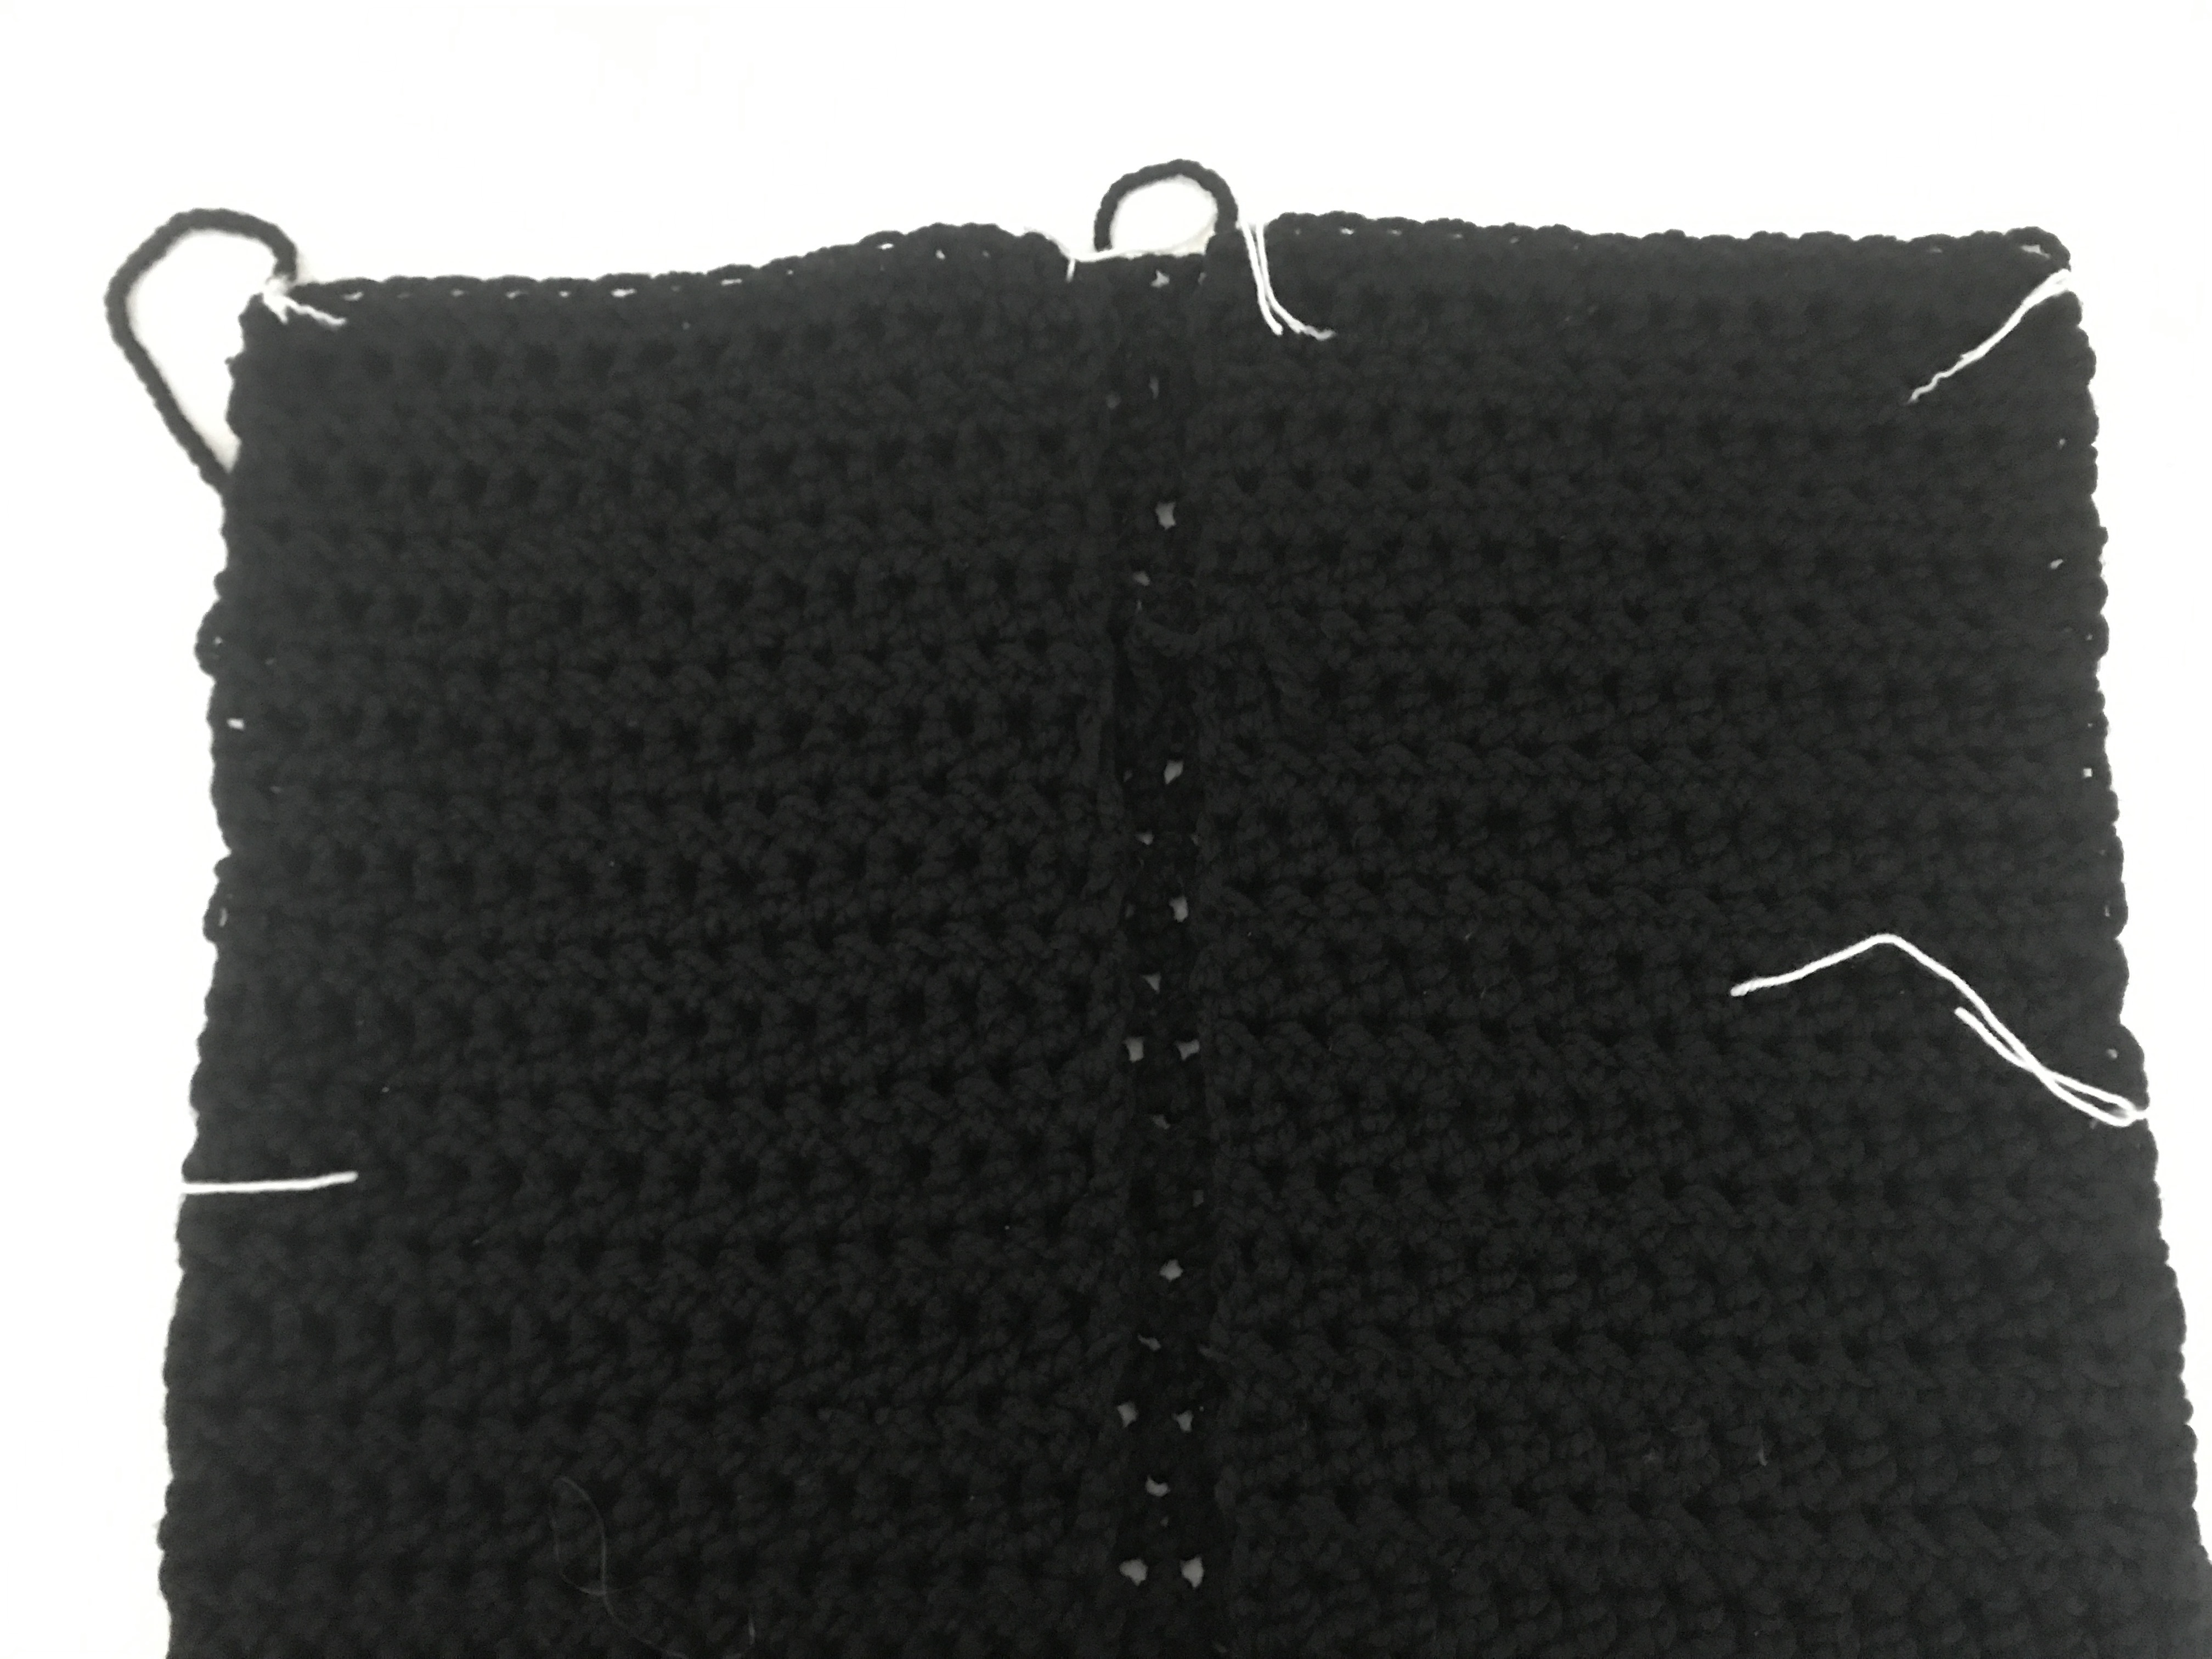 Free Crochet Cardigan Pattern